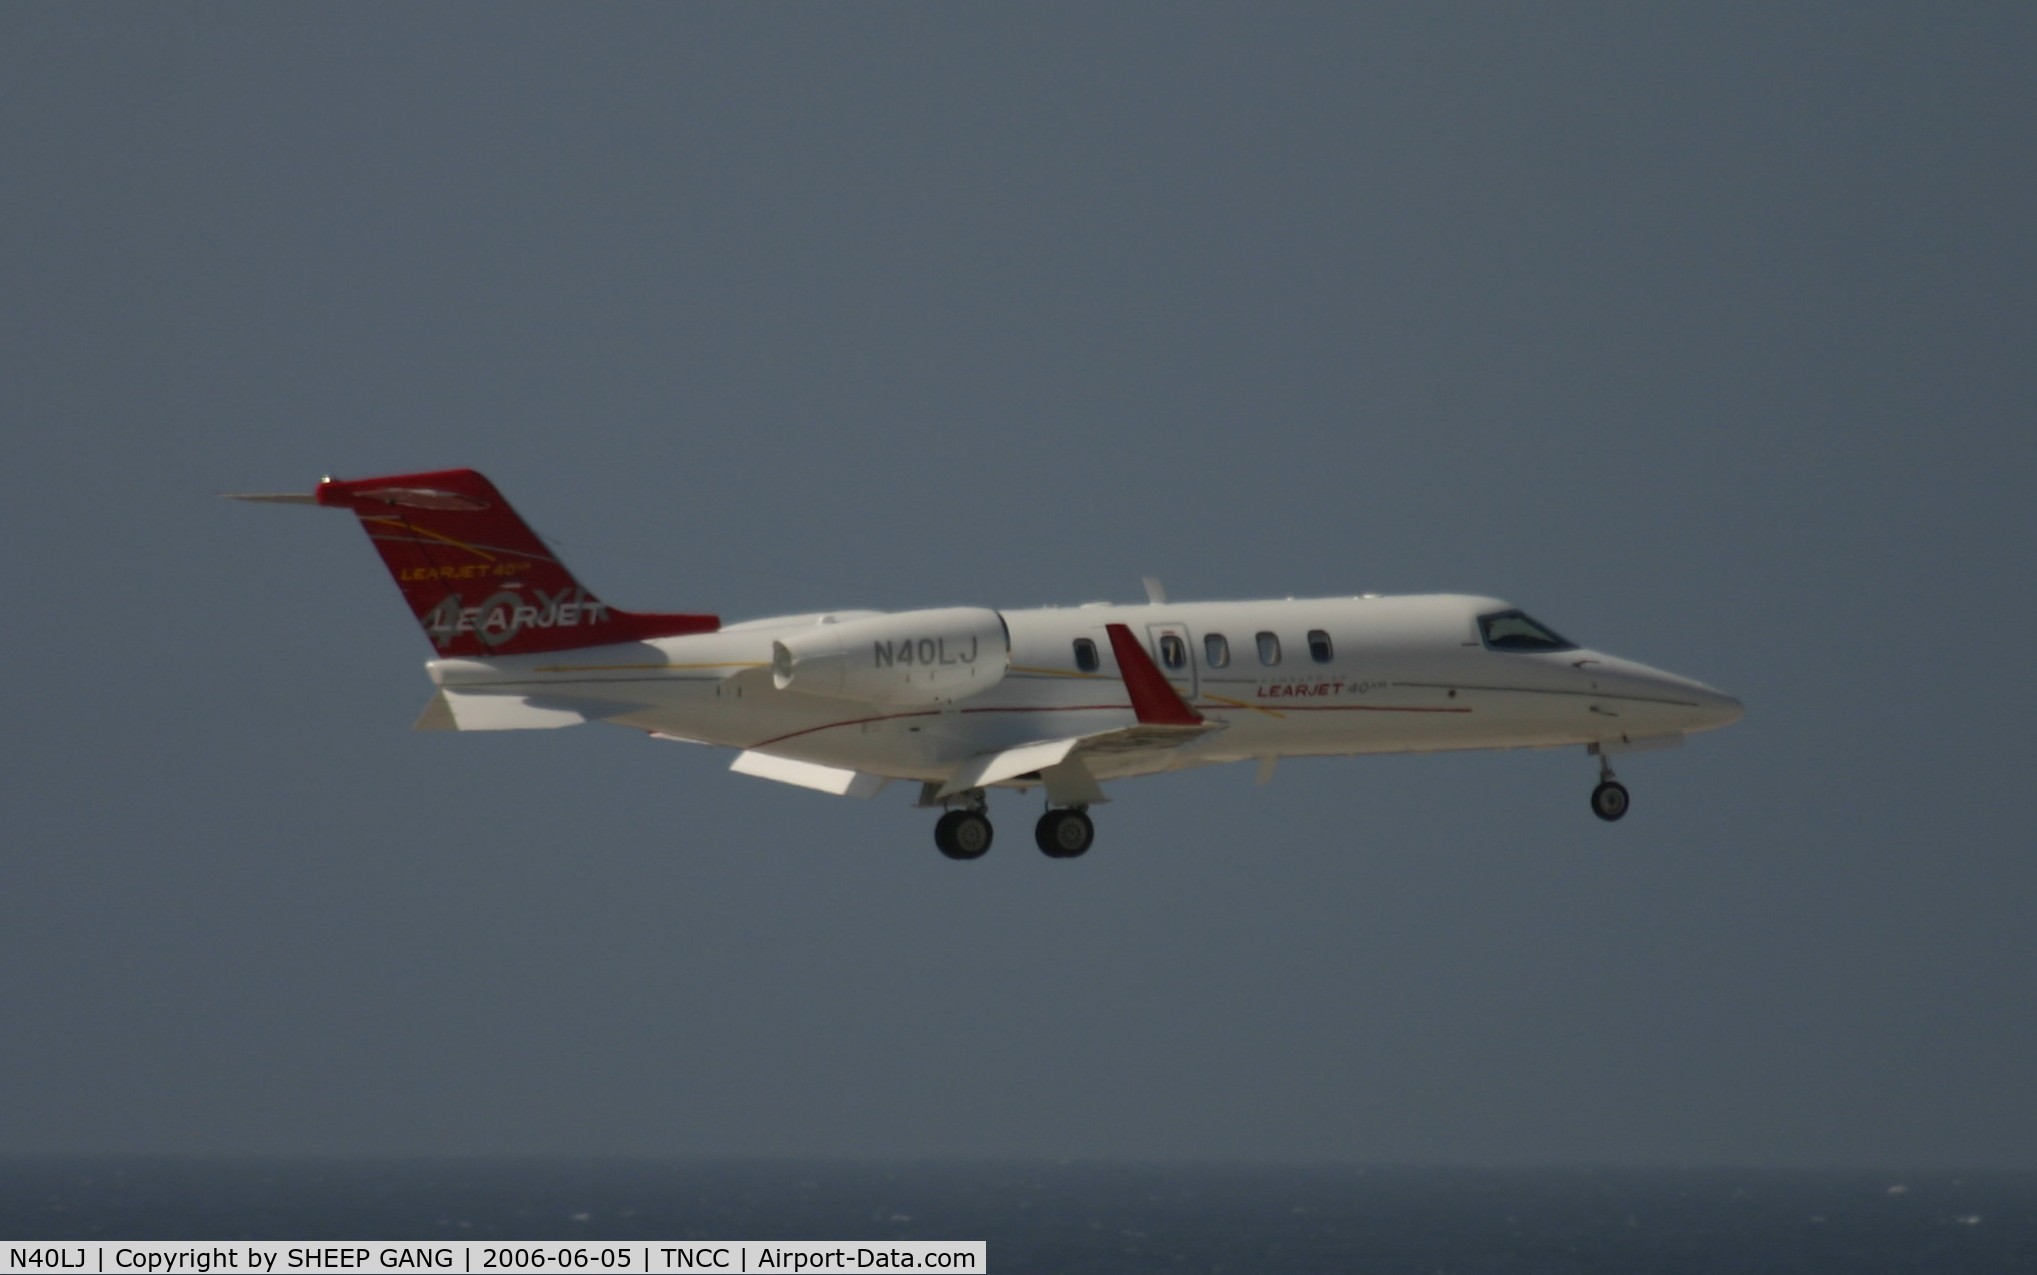 N40LJ, Learjet Inc 45 C/N 2009, landing at Tncc